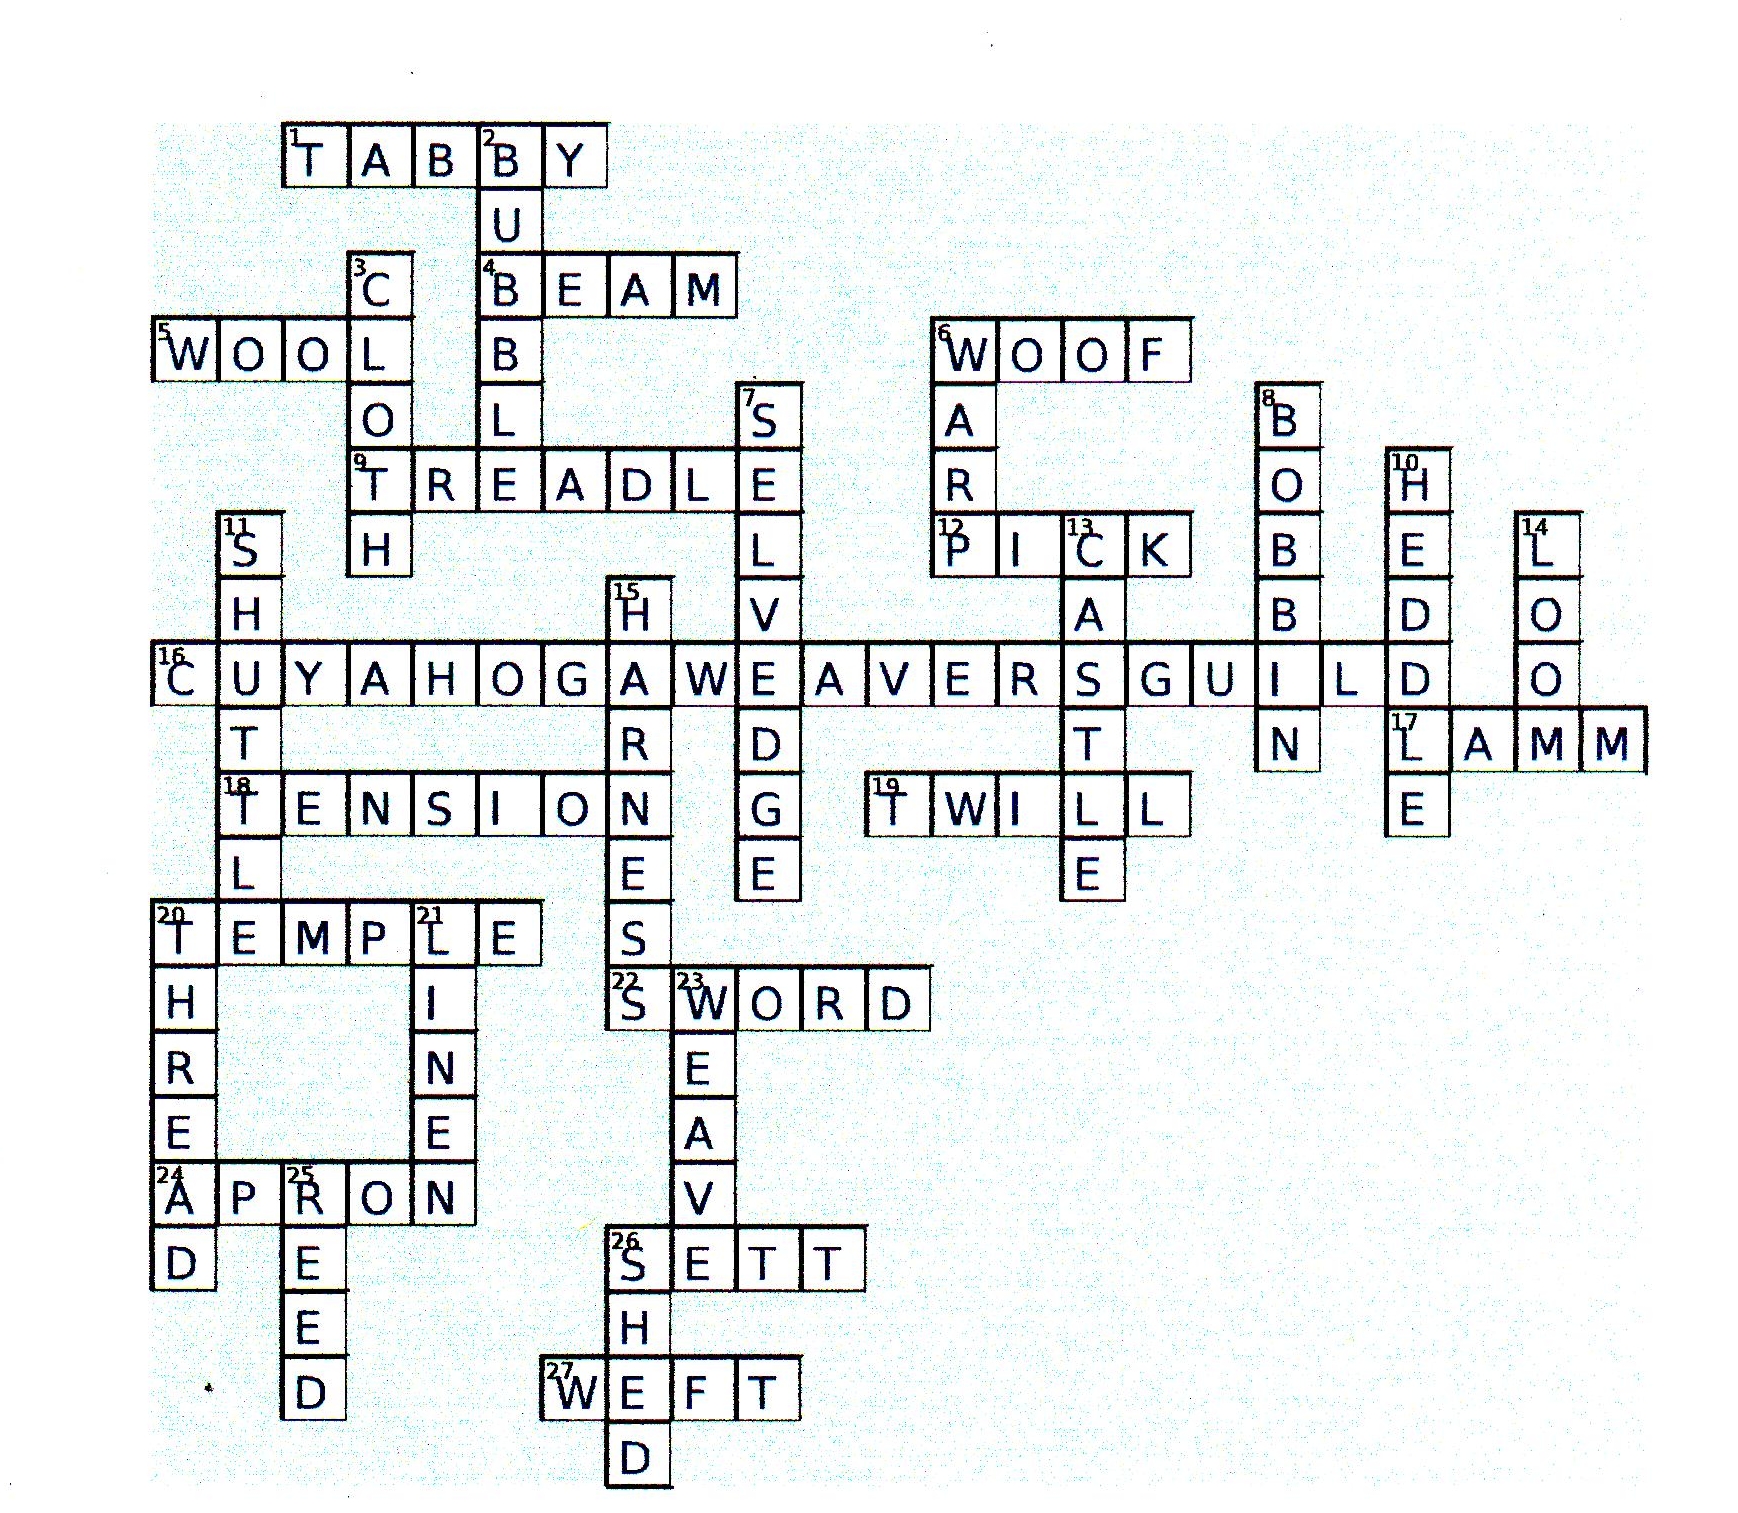 Crossword puzzle answers Cuyahoga Weavers Guild